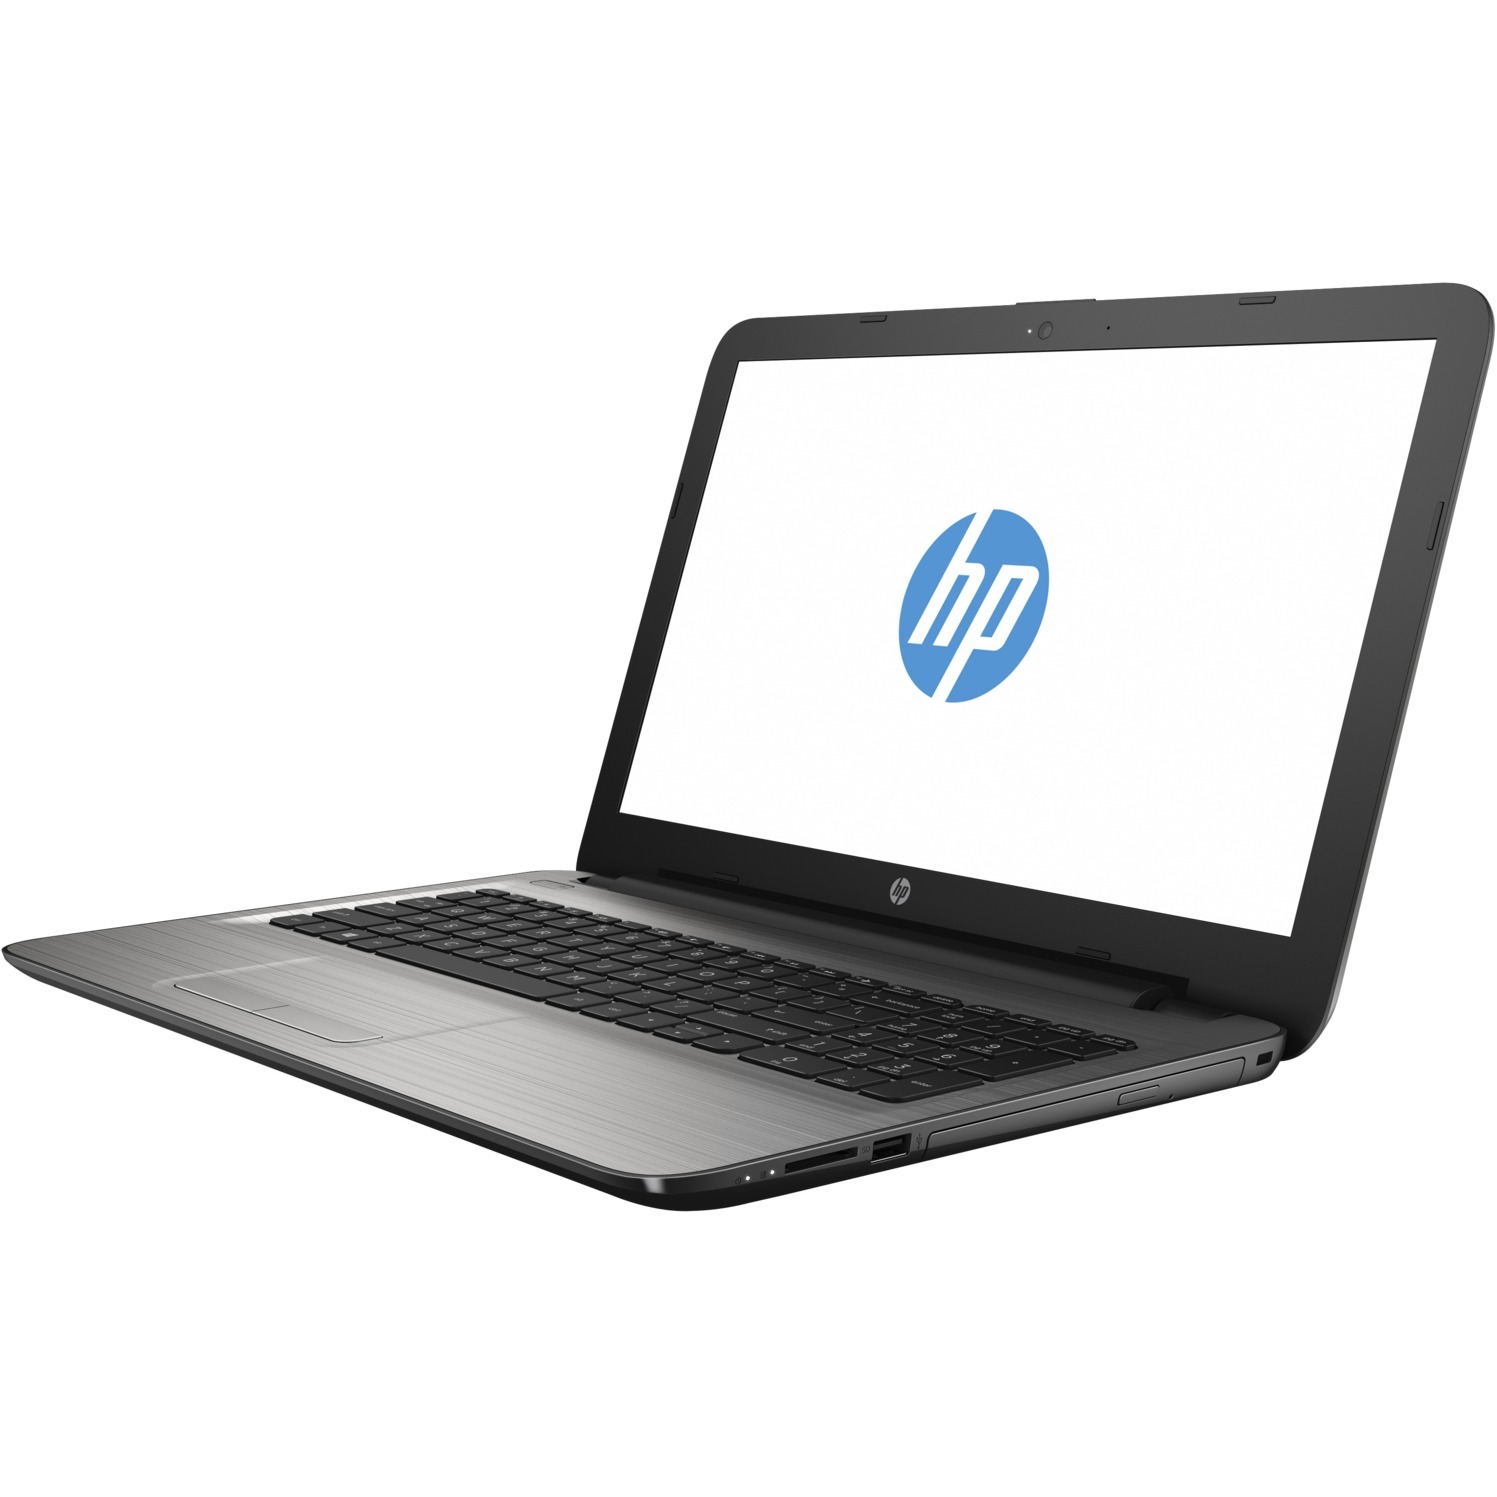 HP 15-ay039wm 15.6" Silver Fusion Laptop, Windows 10, Intel Core i3-6100U Processor, 8GB Memory, 1TB Hard Drive - image 2 of 5